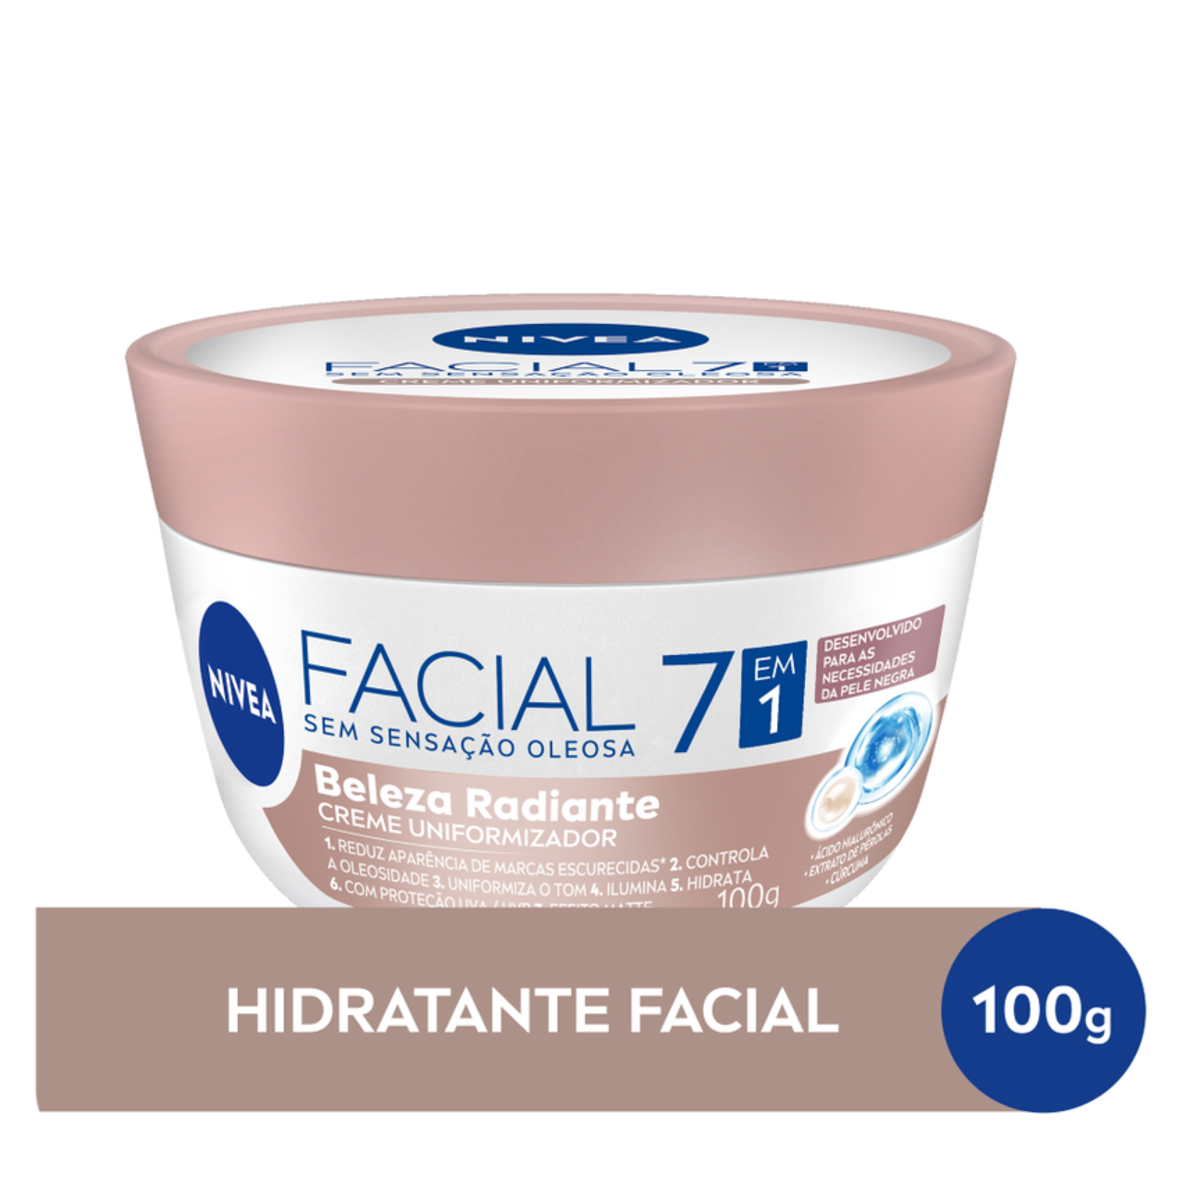 Creme Uniformizador Facial Nivea Beleza Radiante para Pele Negra 100g 100g